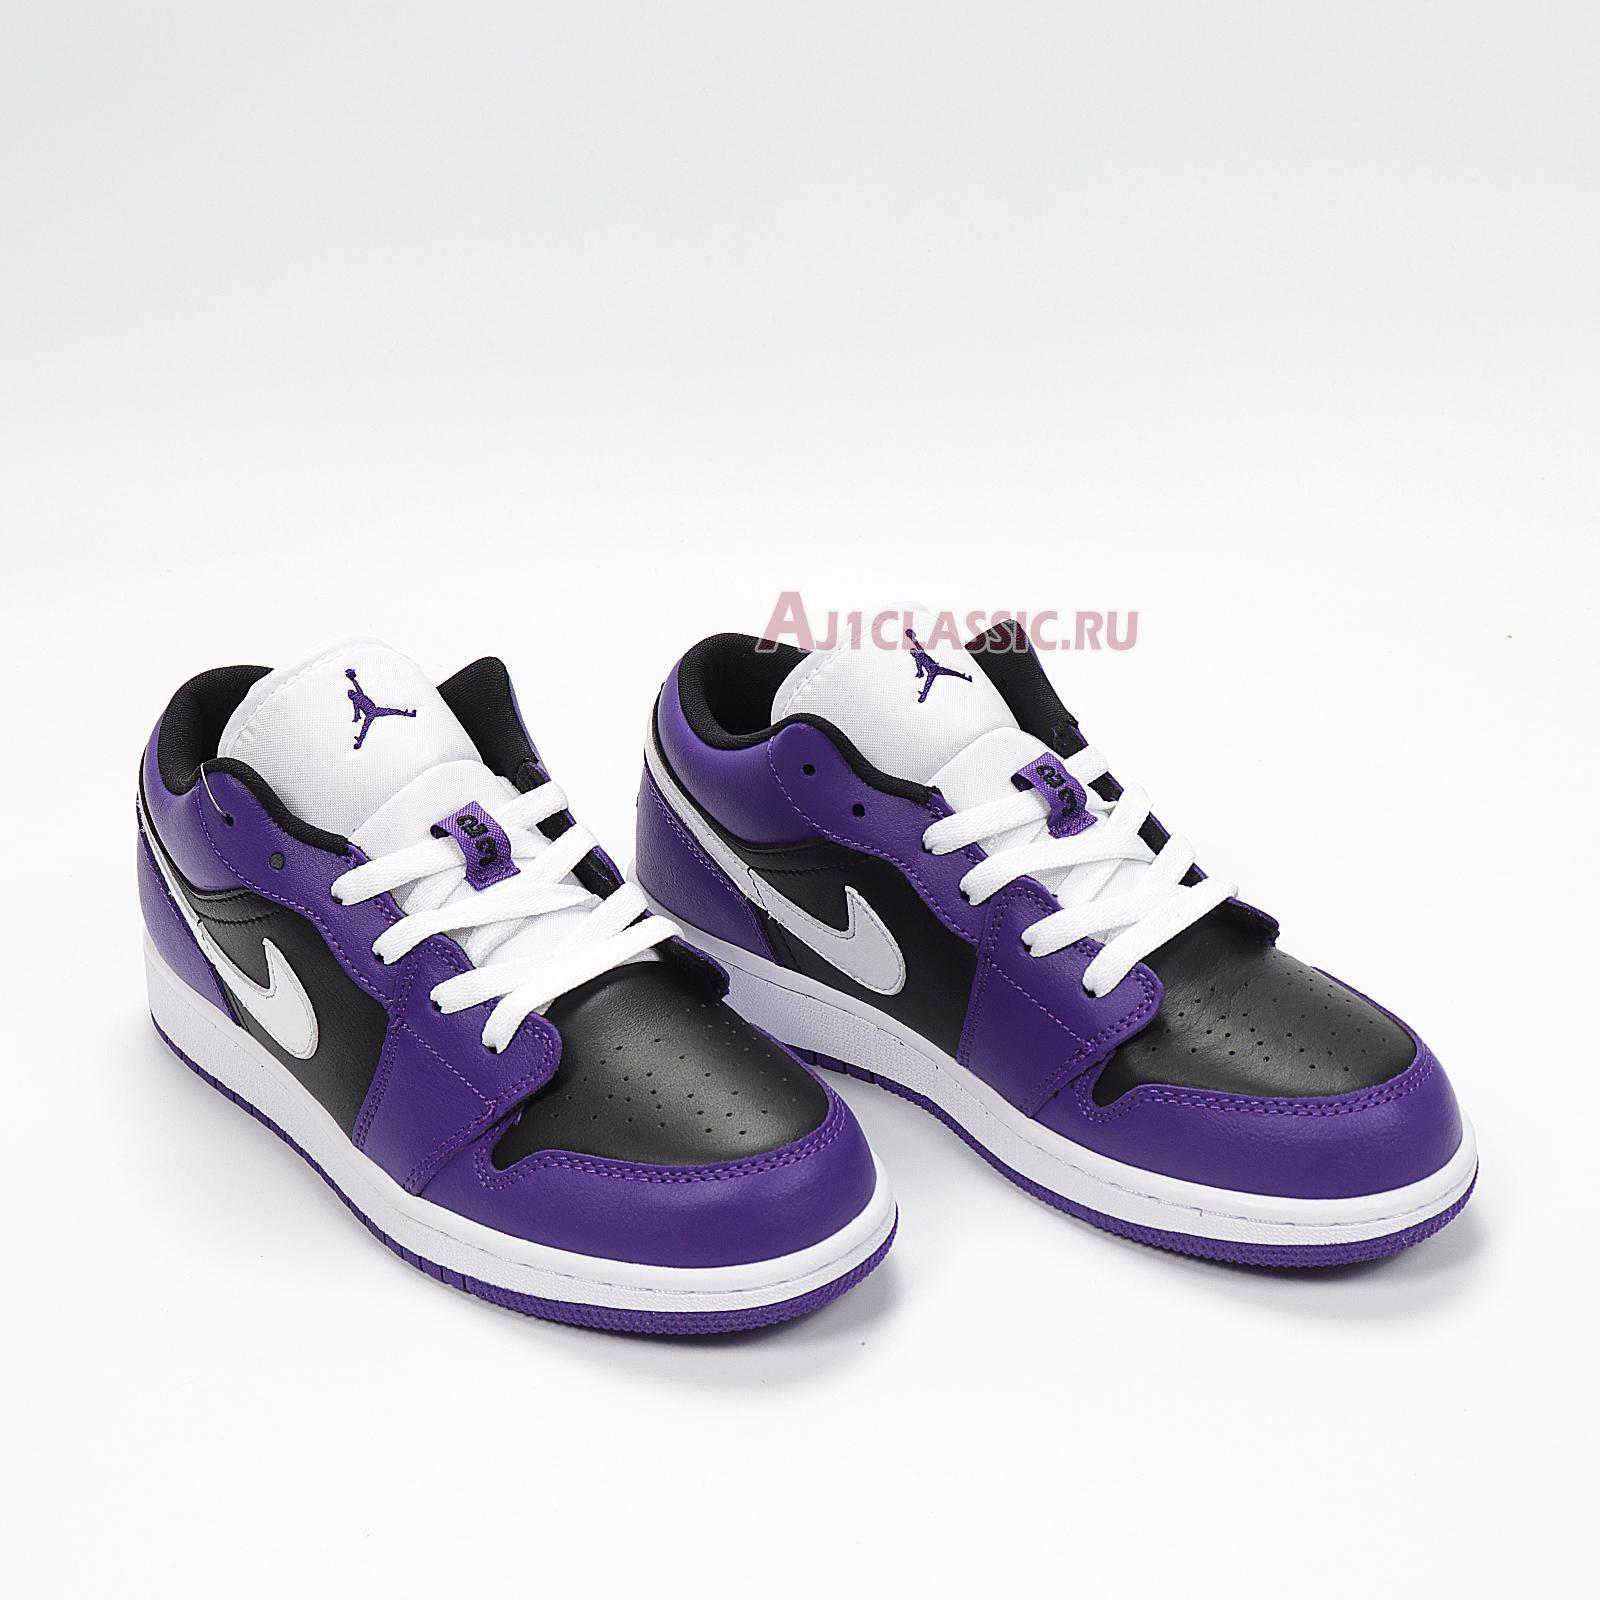 Air Jordan 1 Low "Black Court Purple" 553558-501